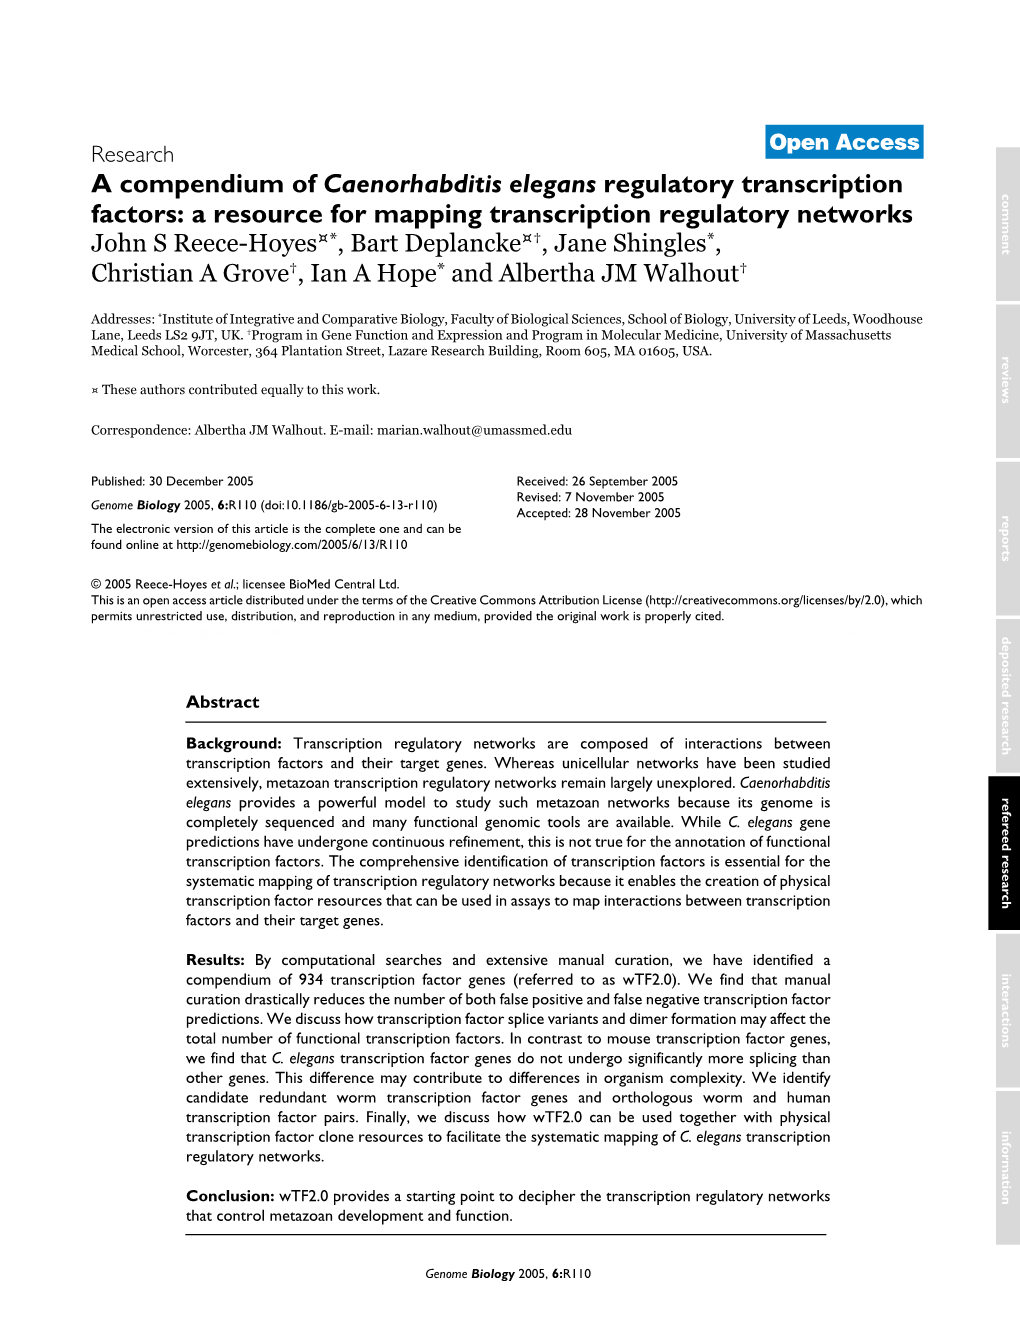 A Compendium of Caenorhabditis Elegans Regulatory Transcription Factors: a Resource for Mapping Transcription Regulatory Network